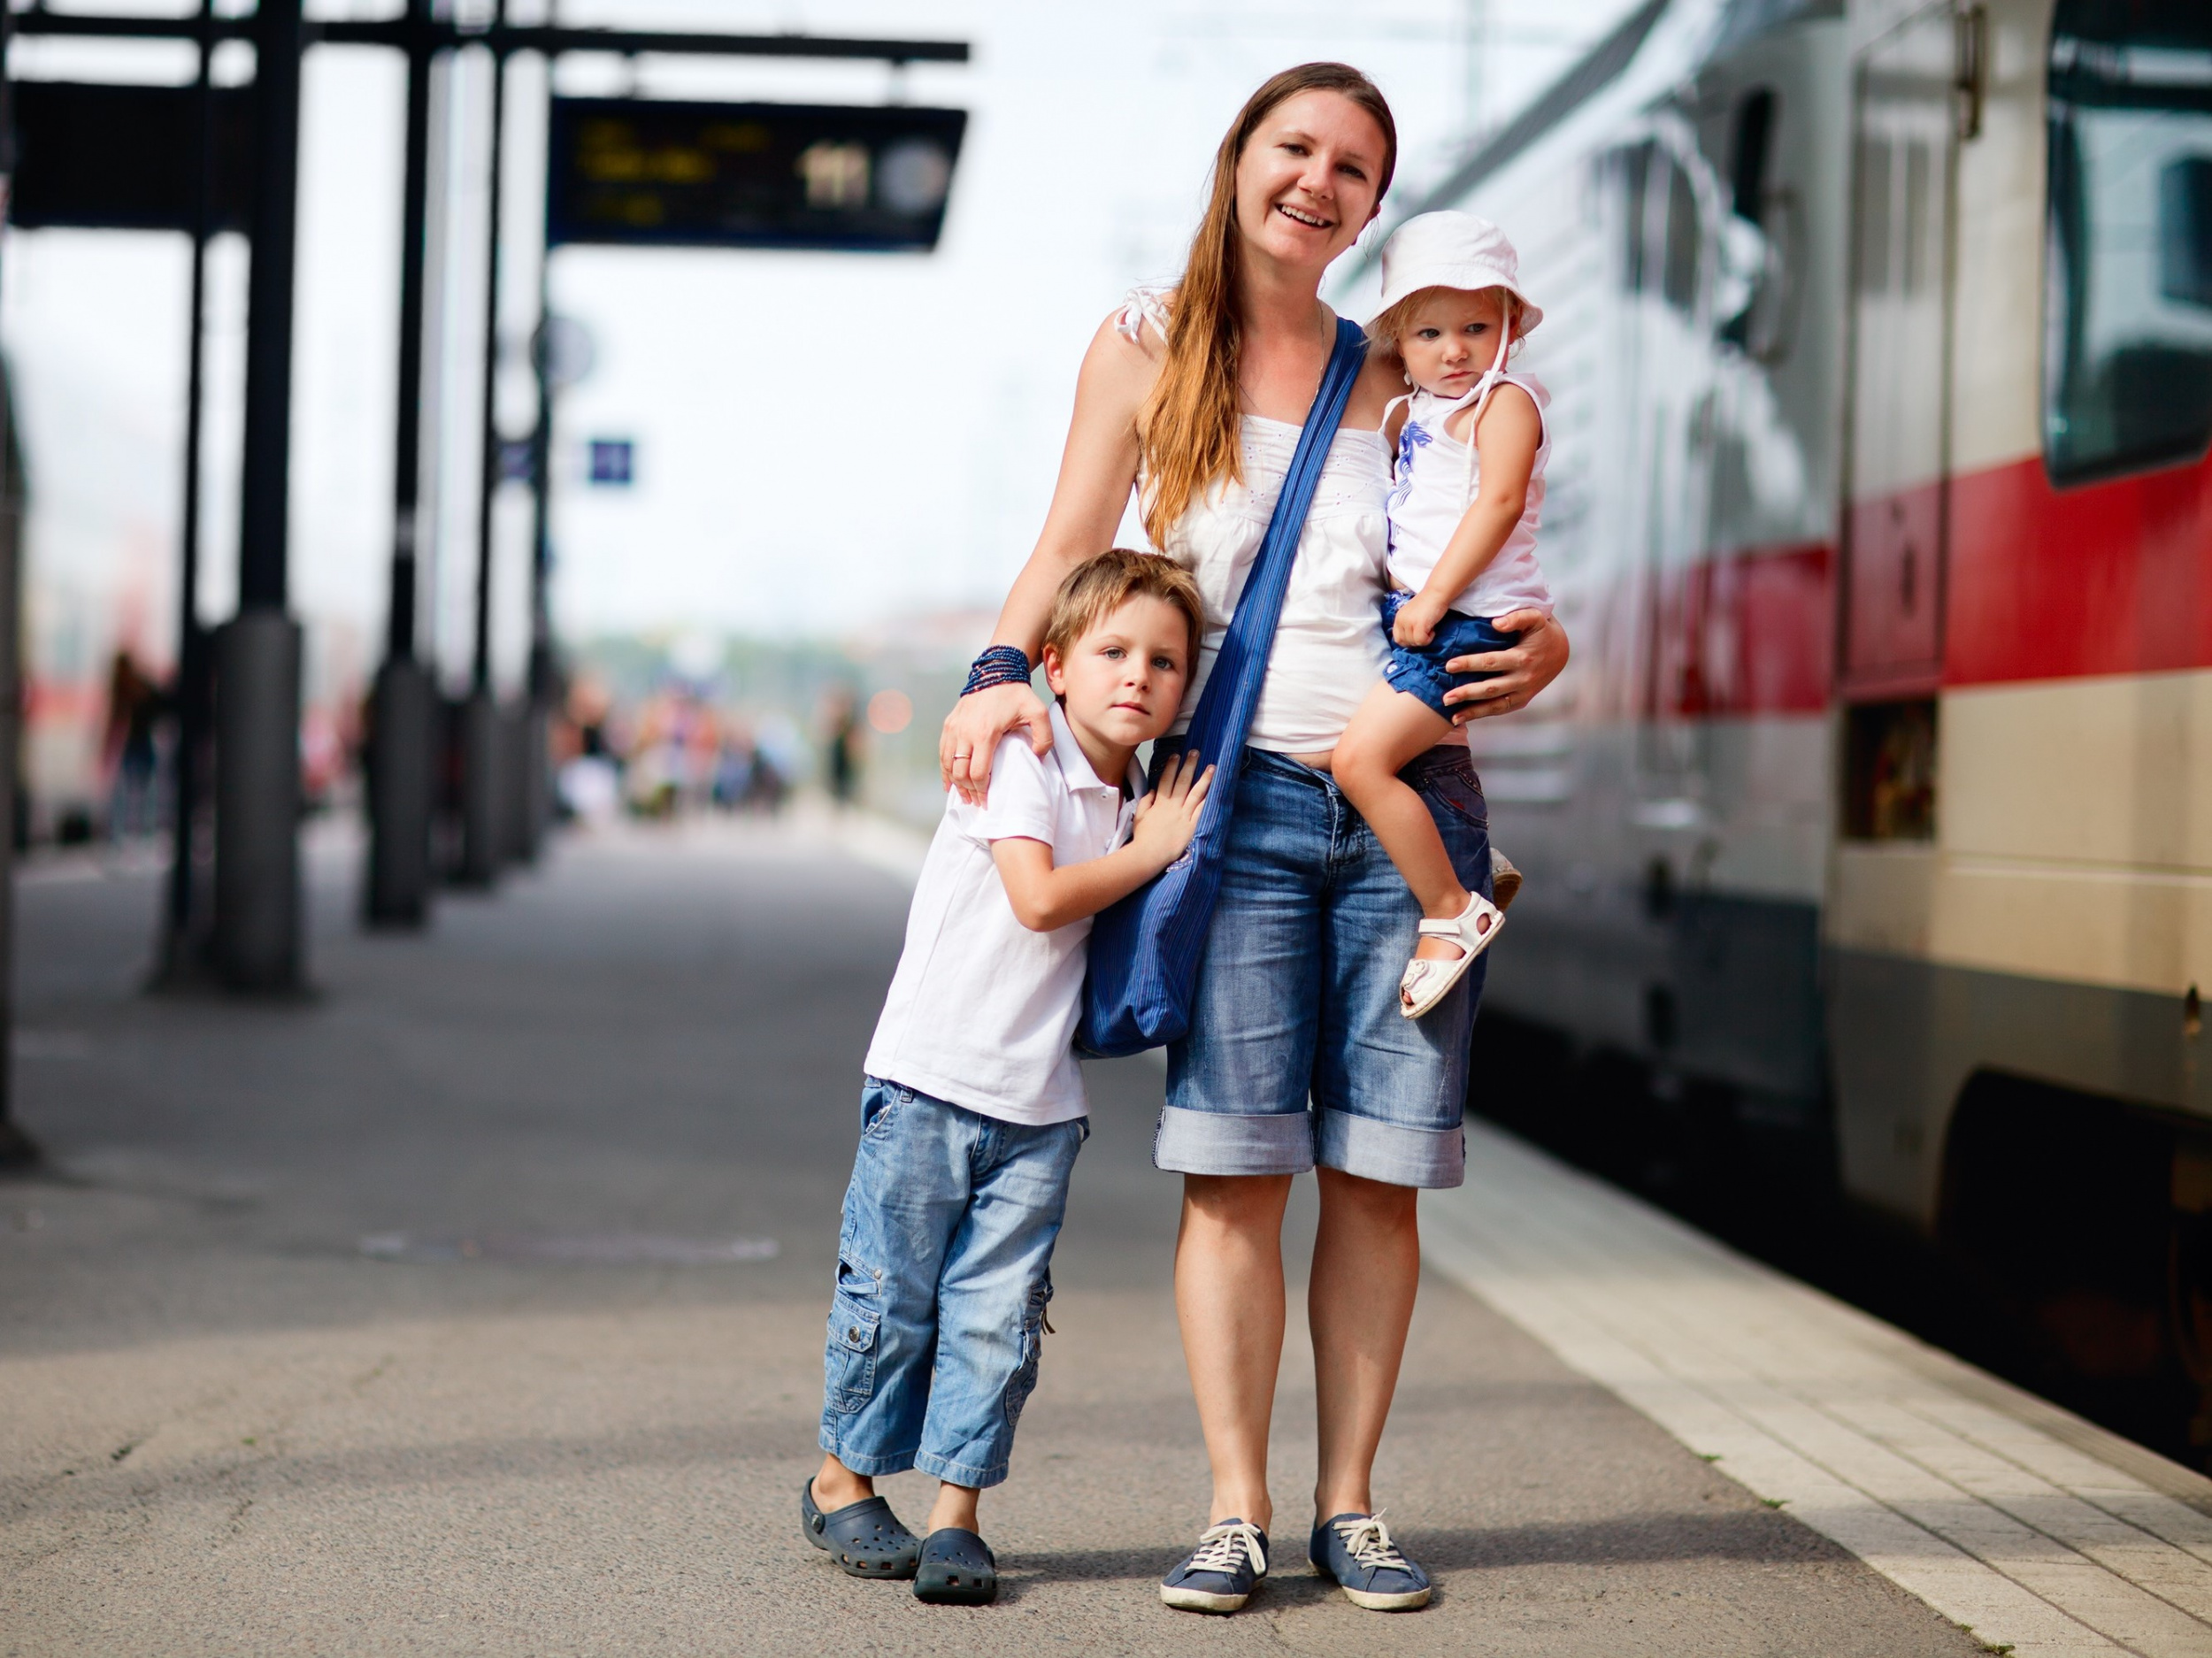 Поезд папа мама. Мама с ребенком на вокзале. Дети на вокзале. Дети с родителями на вокзале. Родитель и ребенок на вокзале.